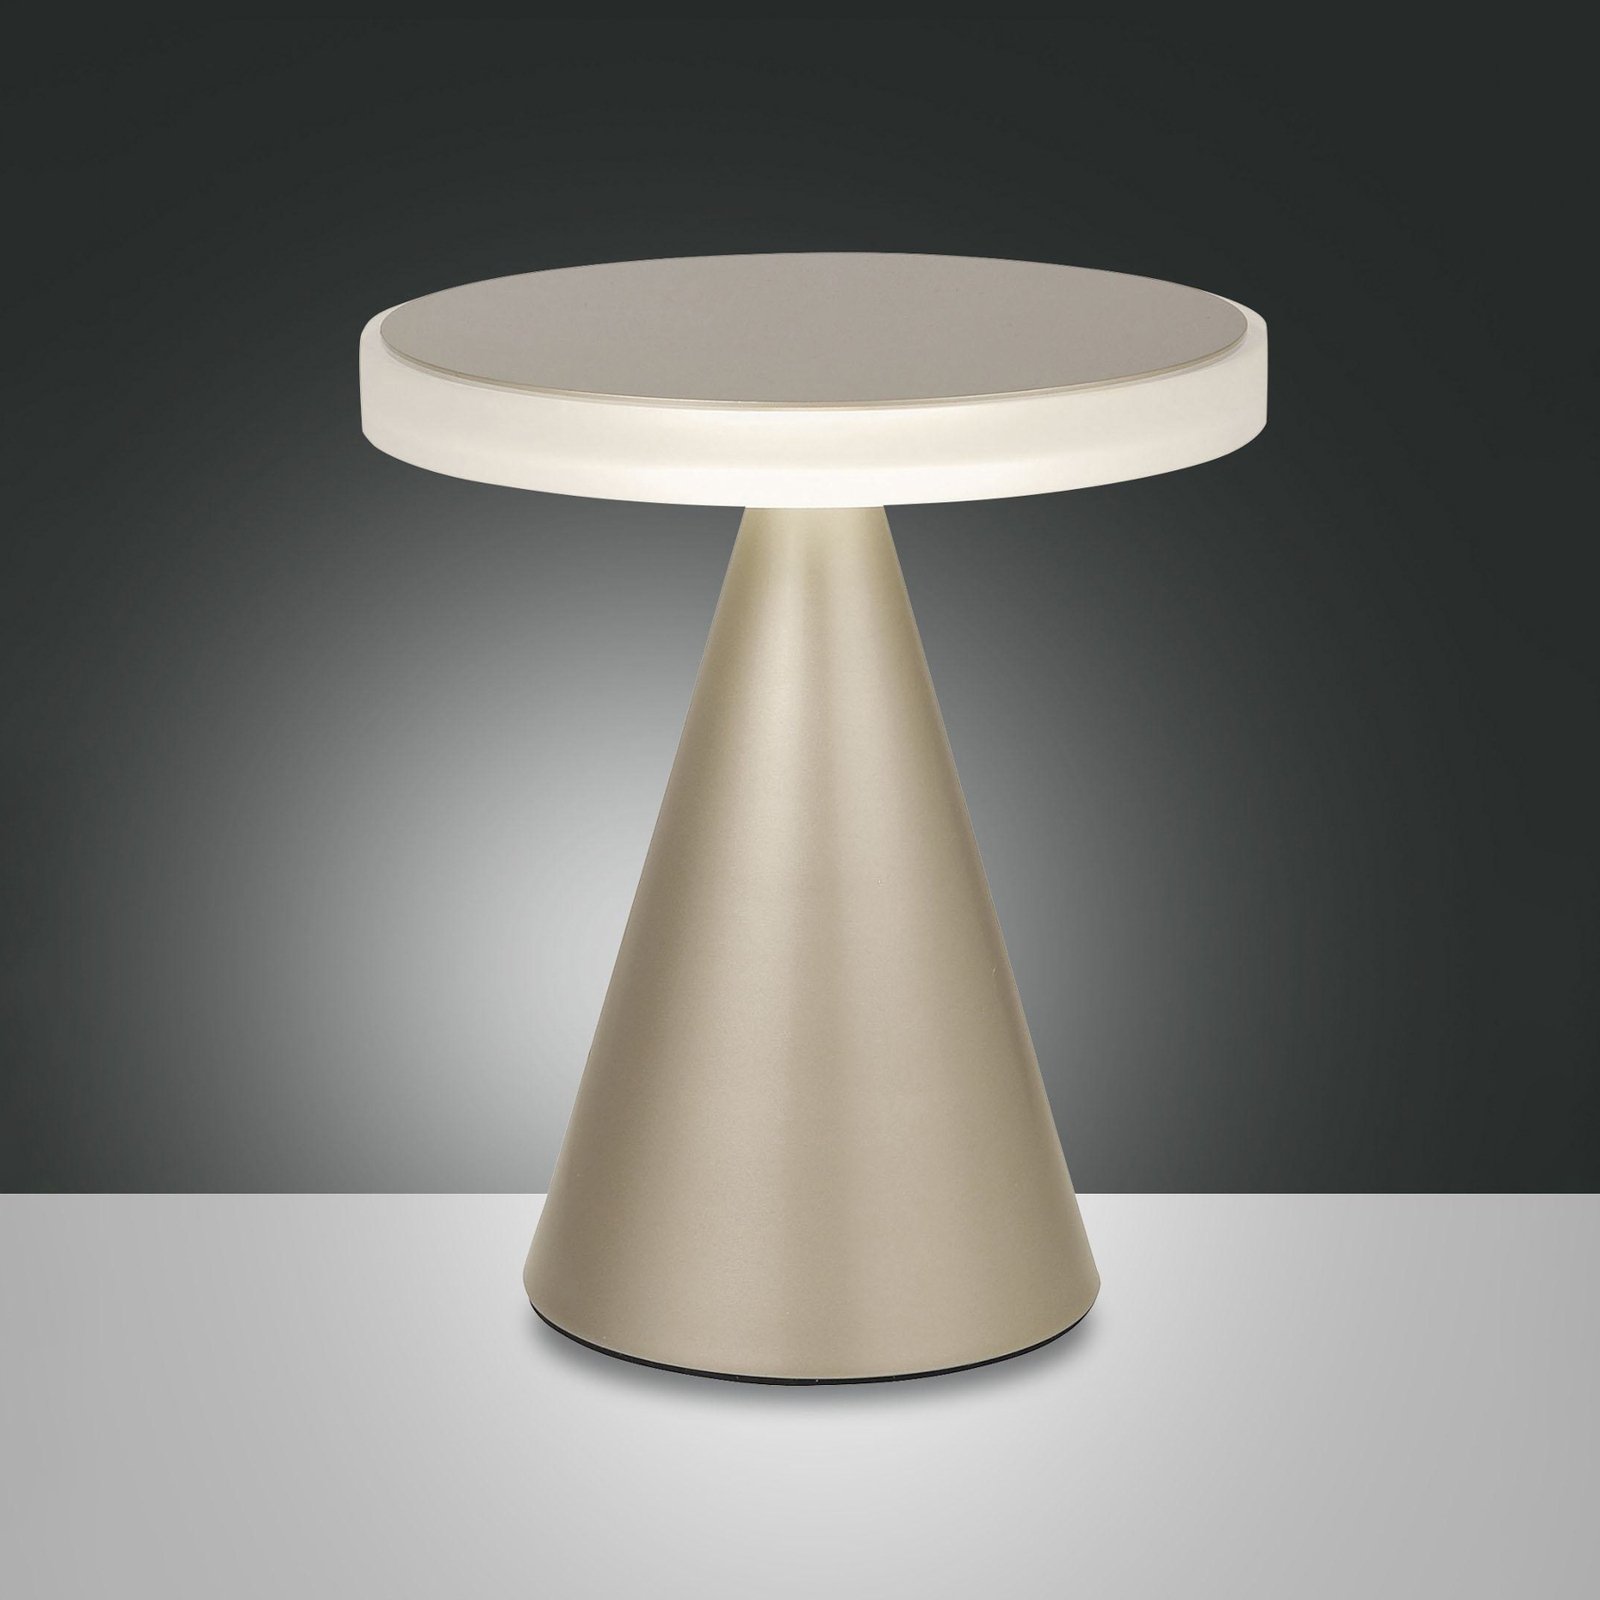 LED table lamp Neutra, height 27 cm, gold matt, touch dimmer